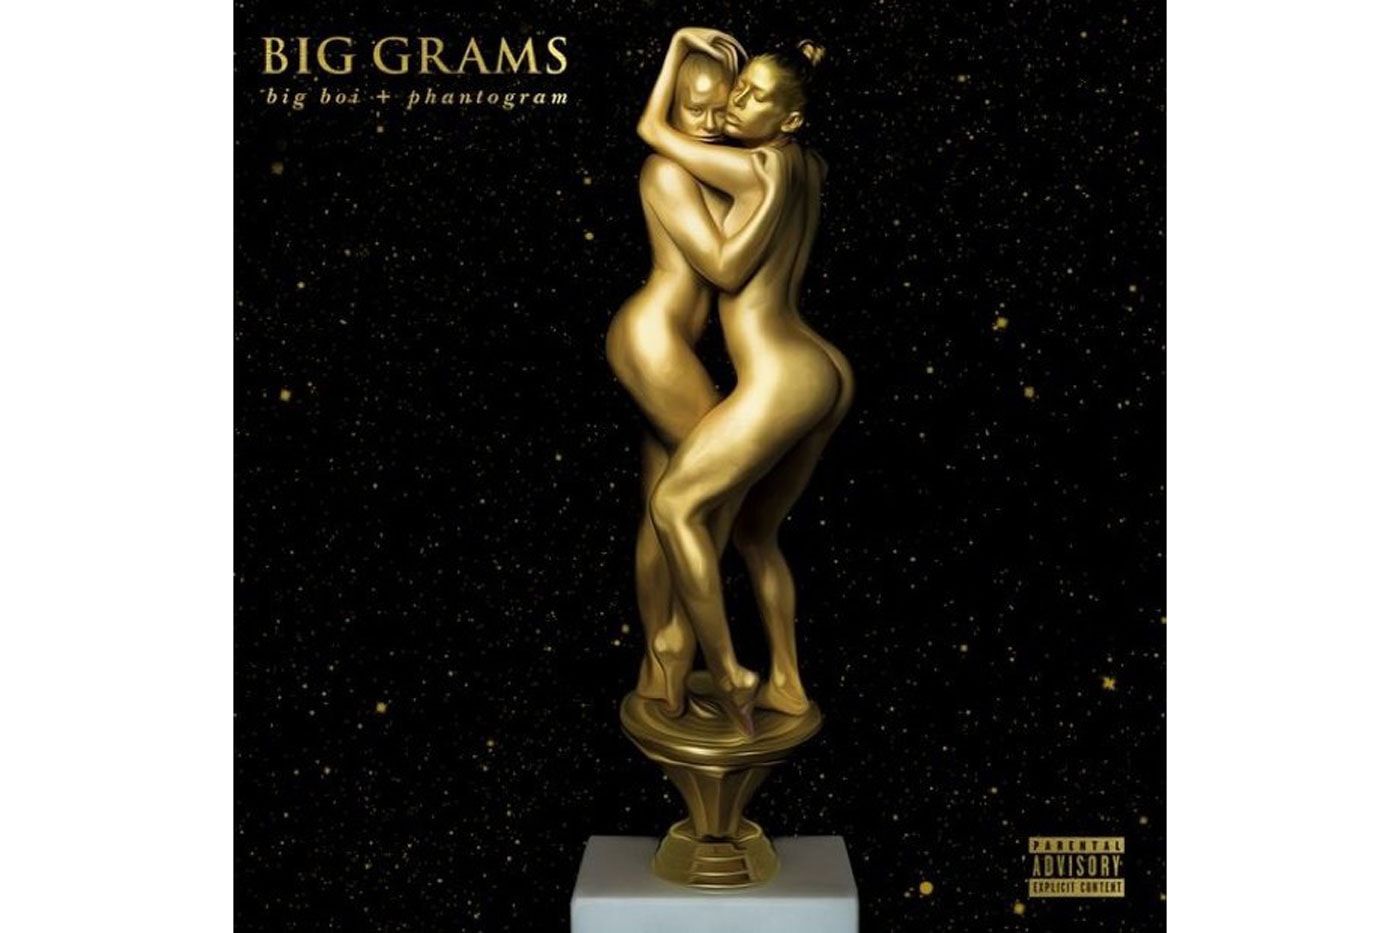 Big Grams (Big Boi & Phantogram) Release New Single, "Lights On"